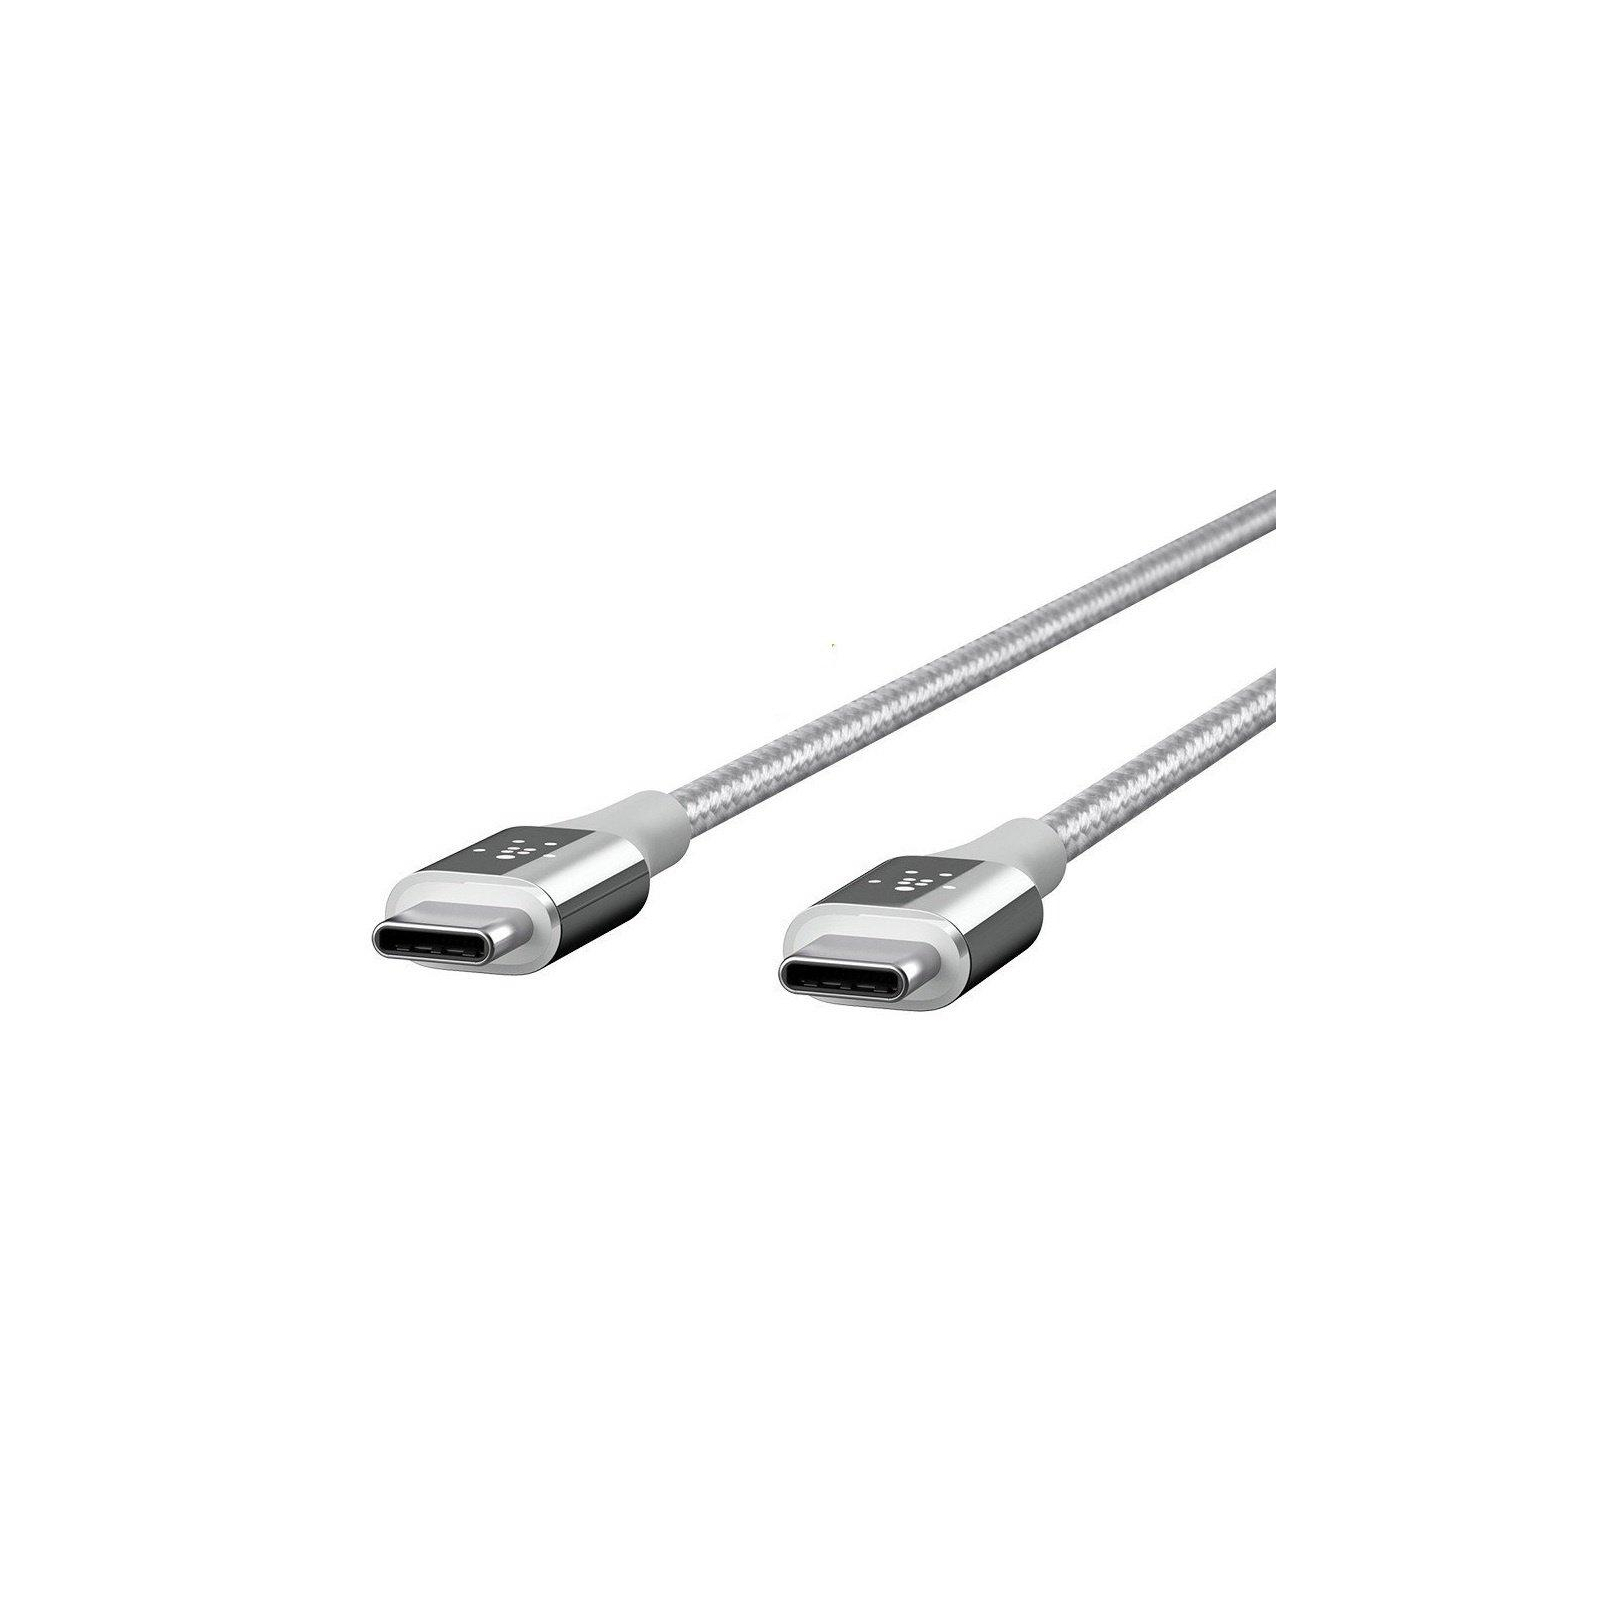 Дата кабель USB-C to USB-C 1.2m USB 3.1 MIXIT DuraTek silver Belkin (F2CU050bt04-SLV)